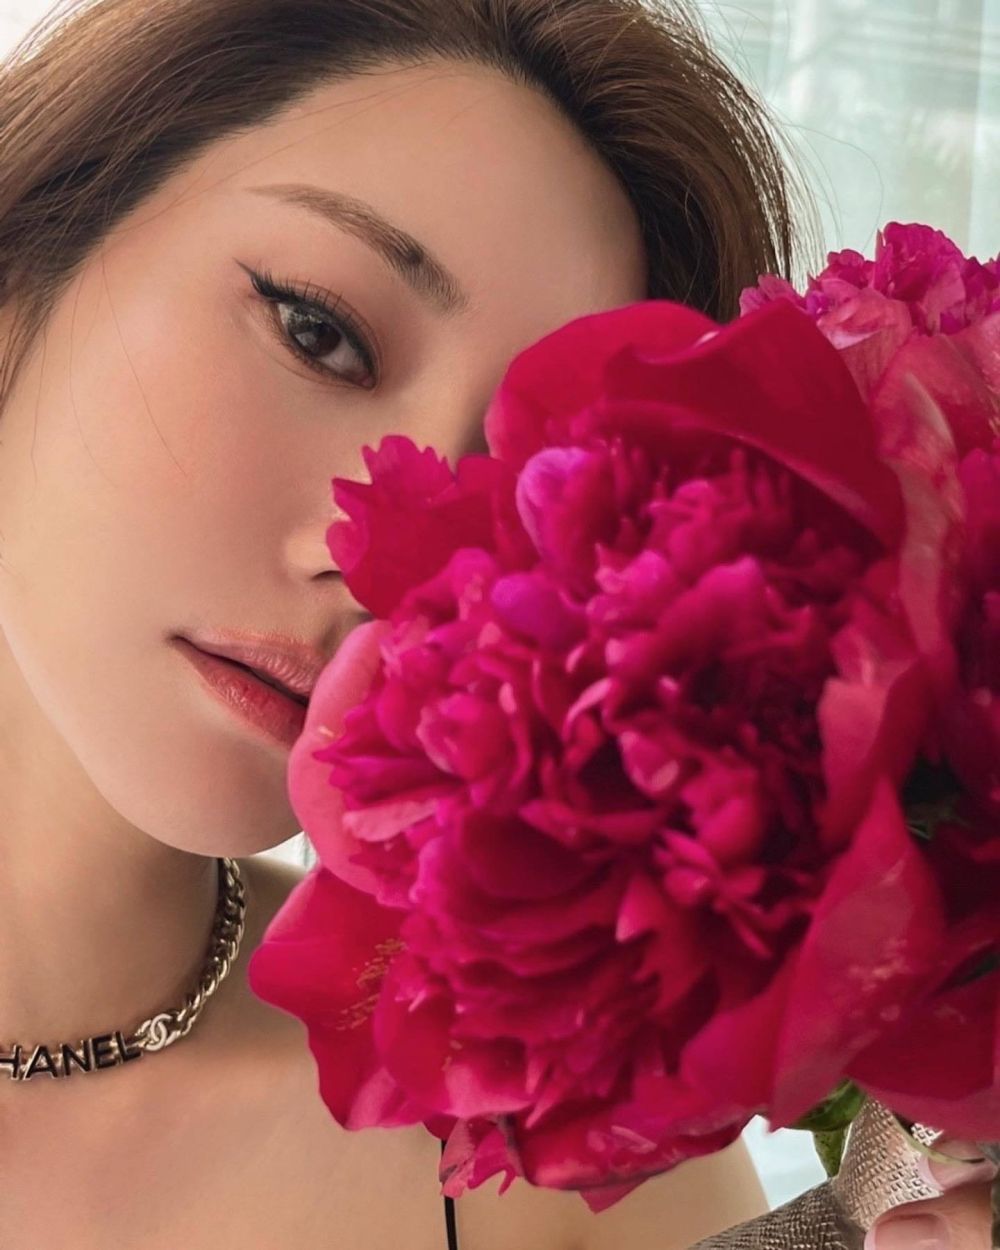 Jun-hee Ko Sexy and Hottest Photos , Latest Pics